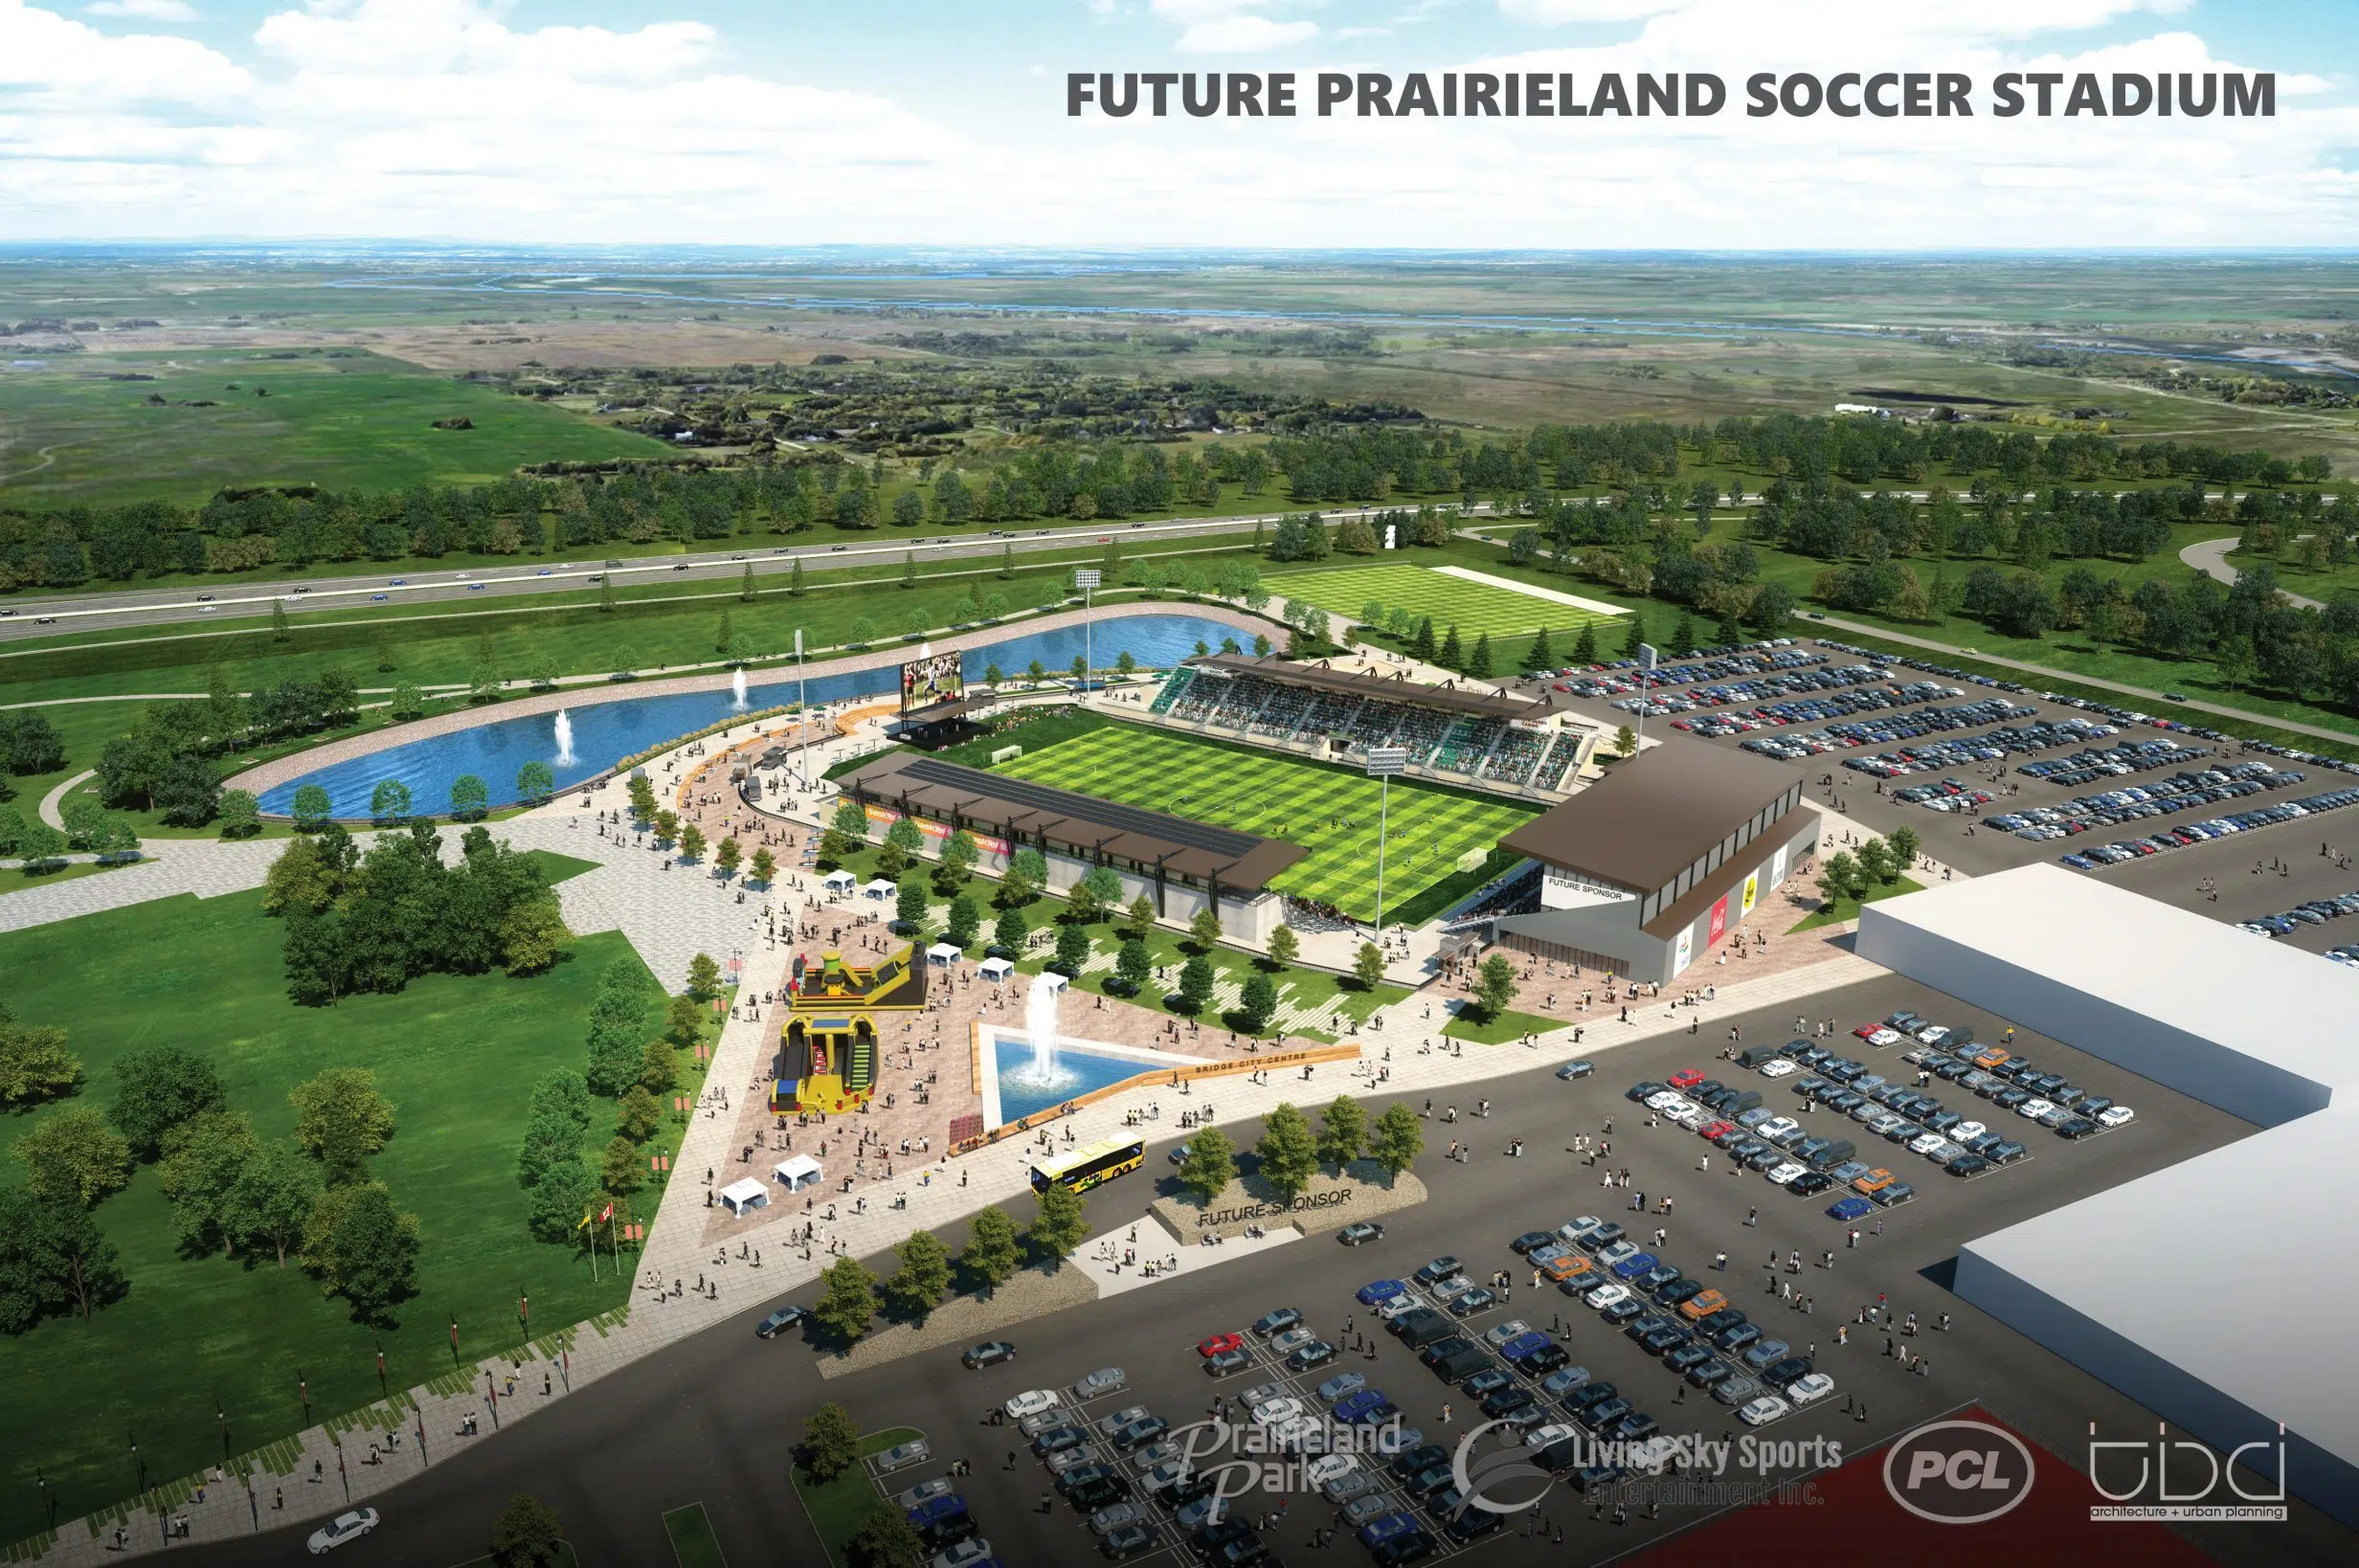 Stadium plans unveiled for Saskatoon soccer team